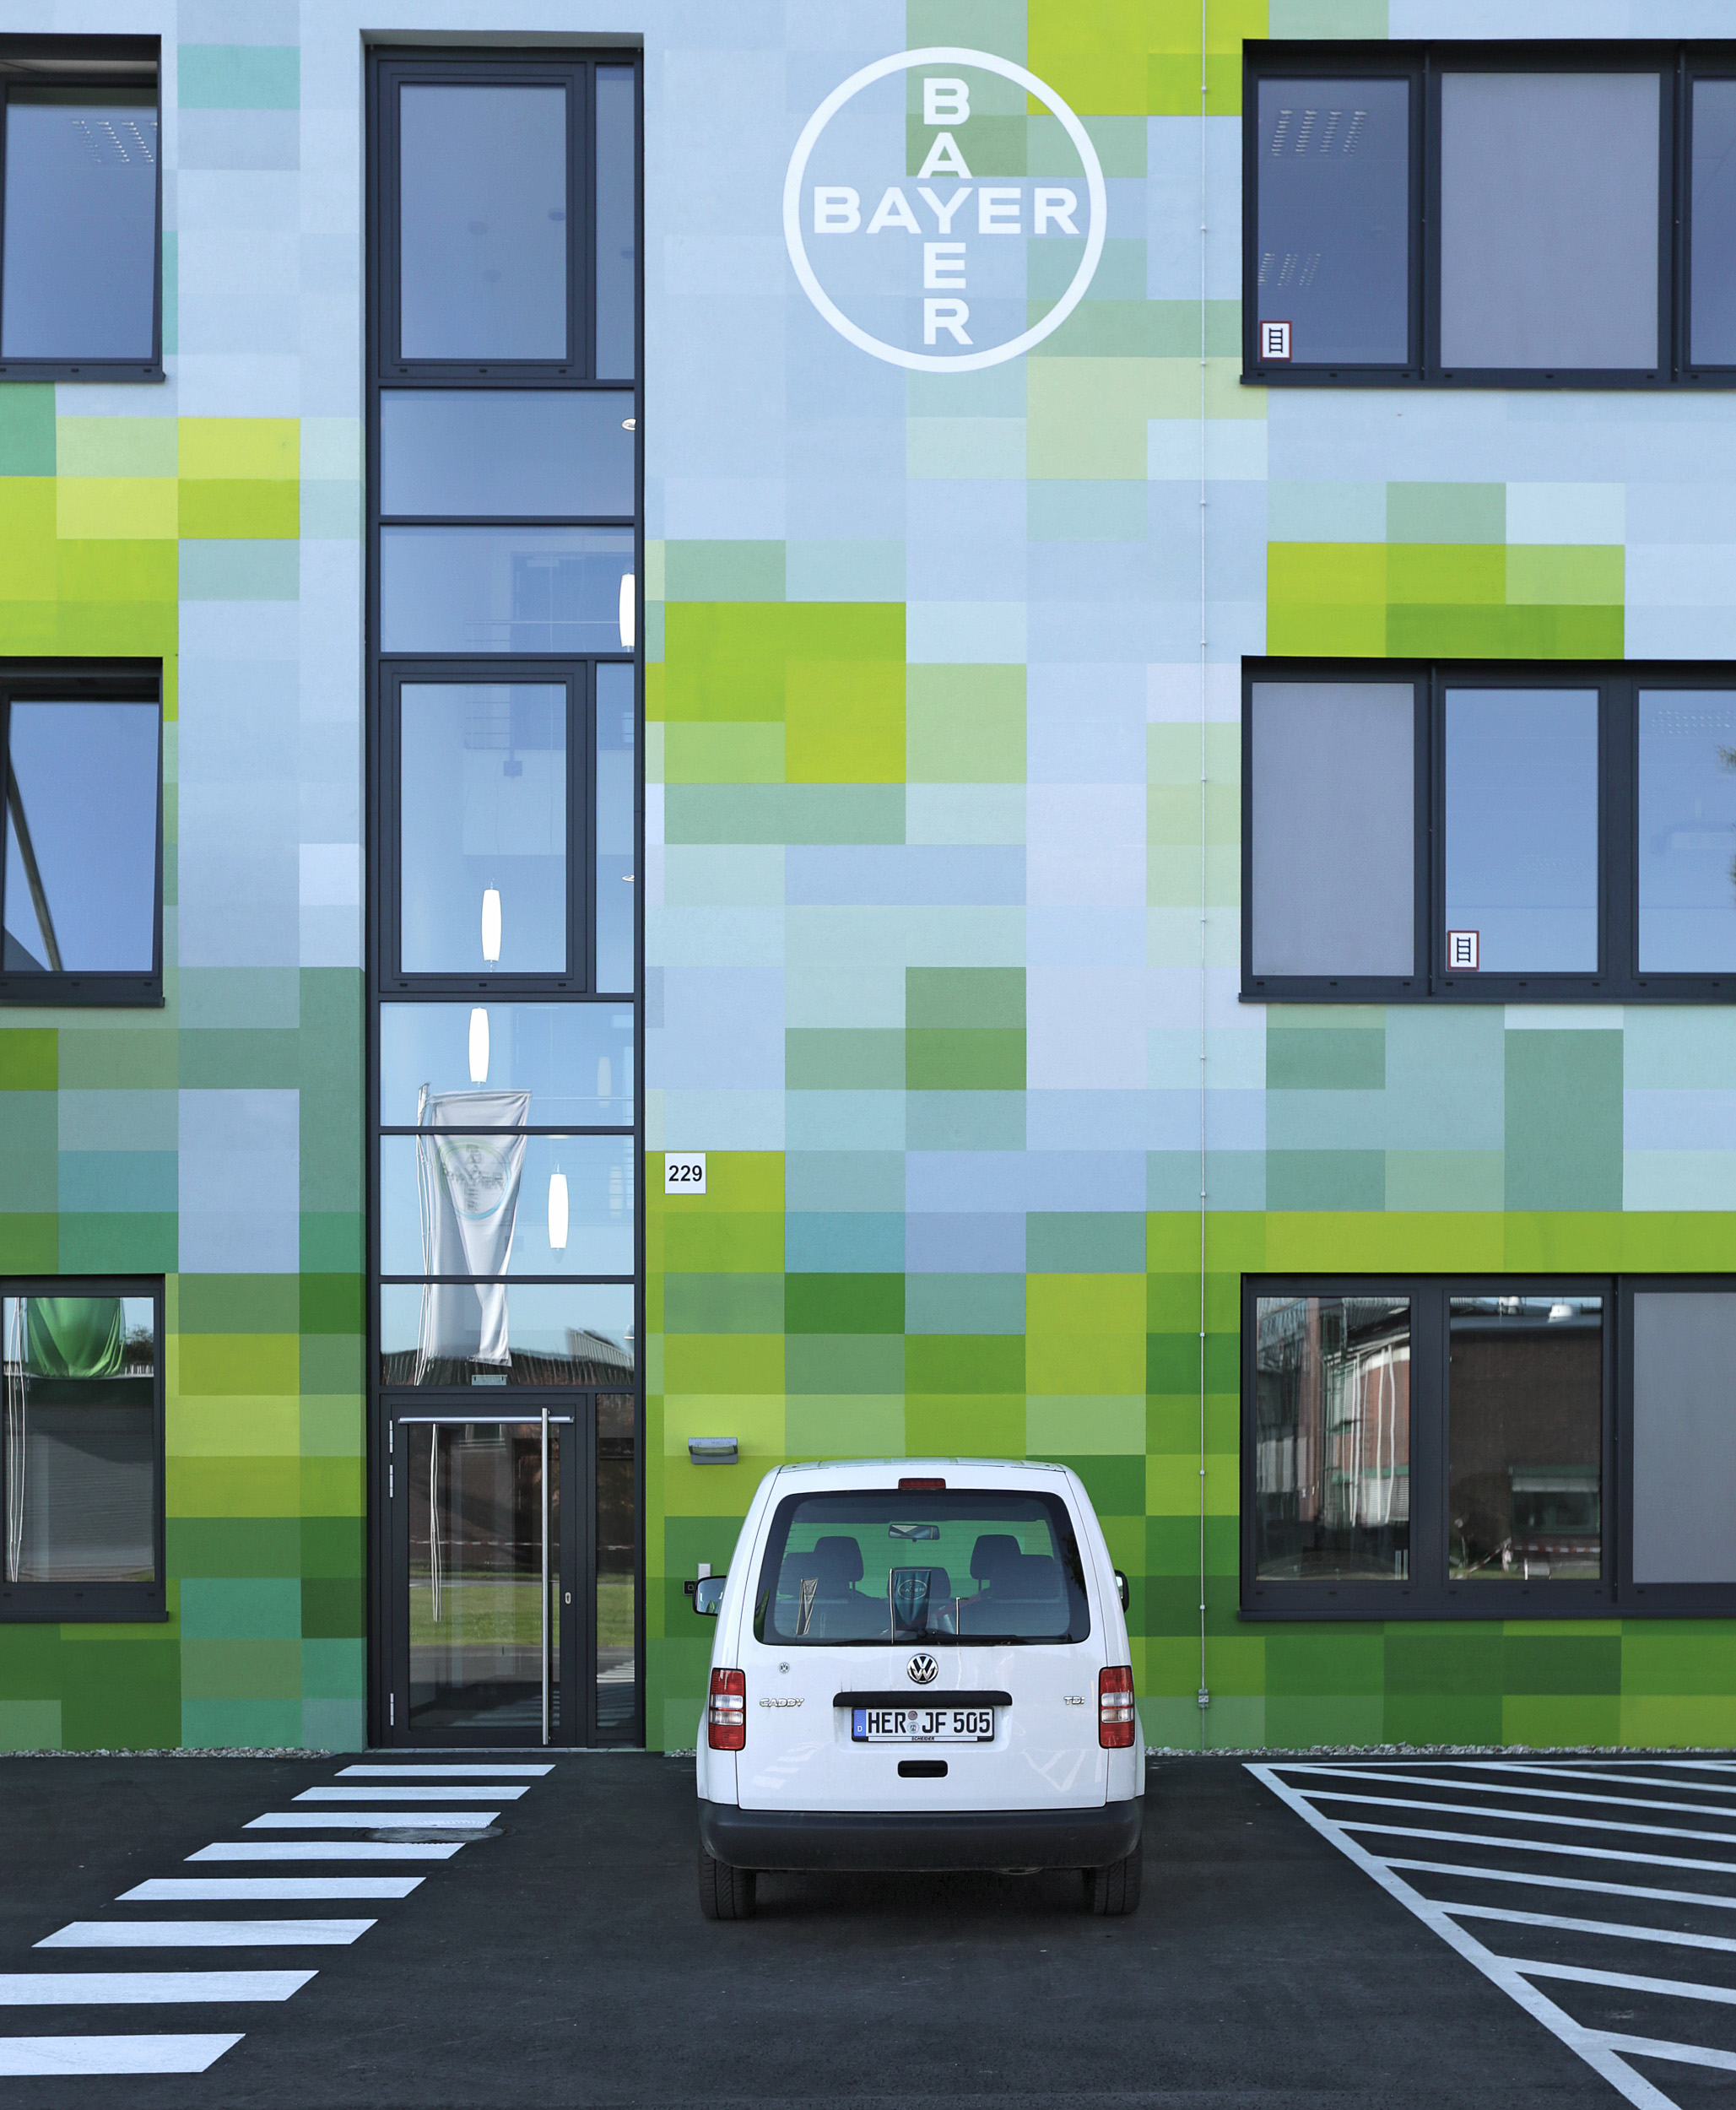 Fassadengestaltung-auf-Putz-bayer-logo-reklame-farbkonzept-pixel-grafik.jpg